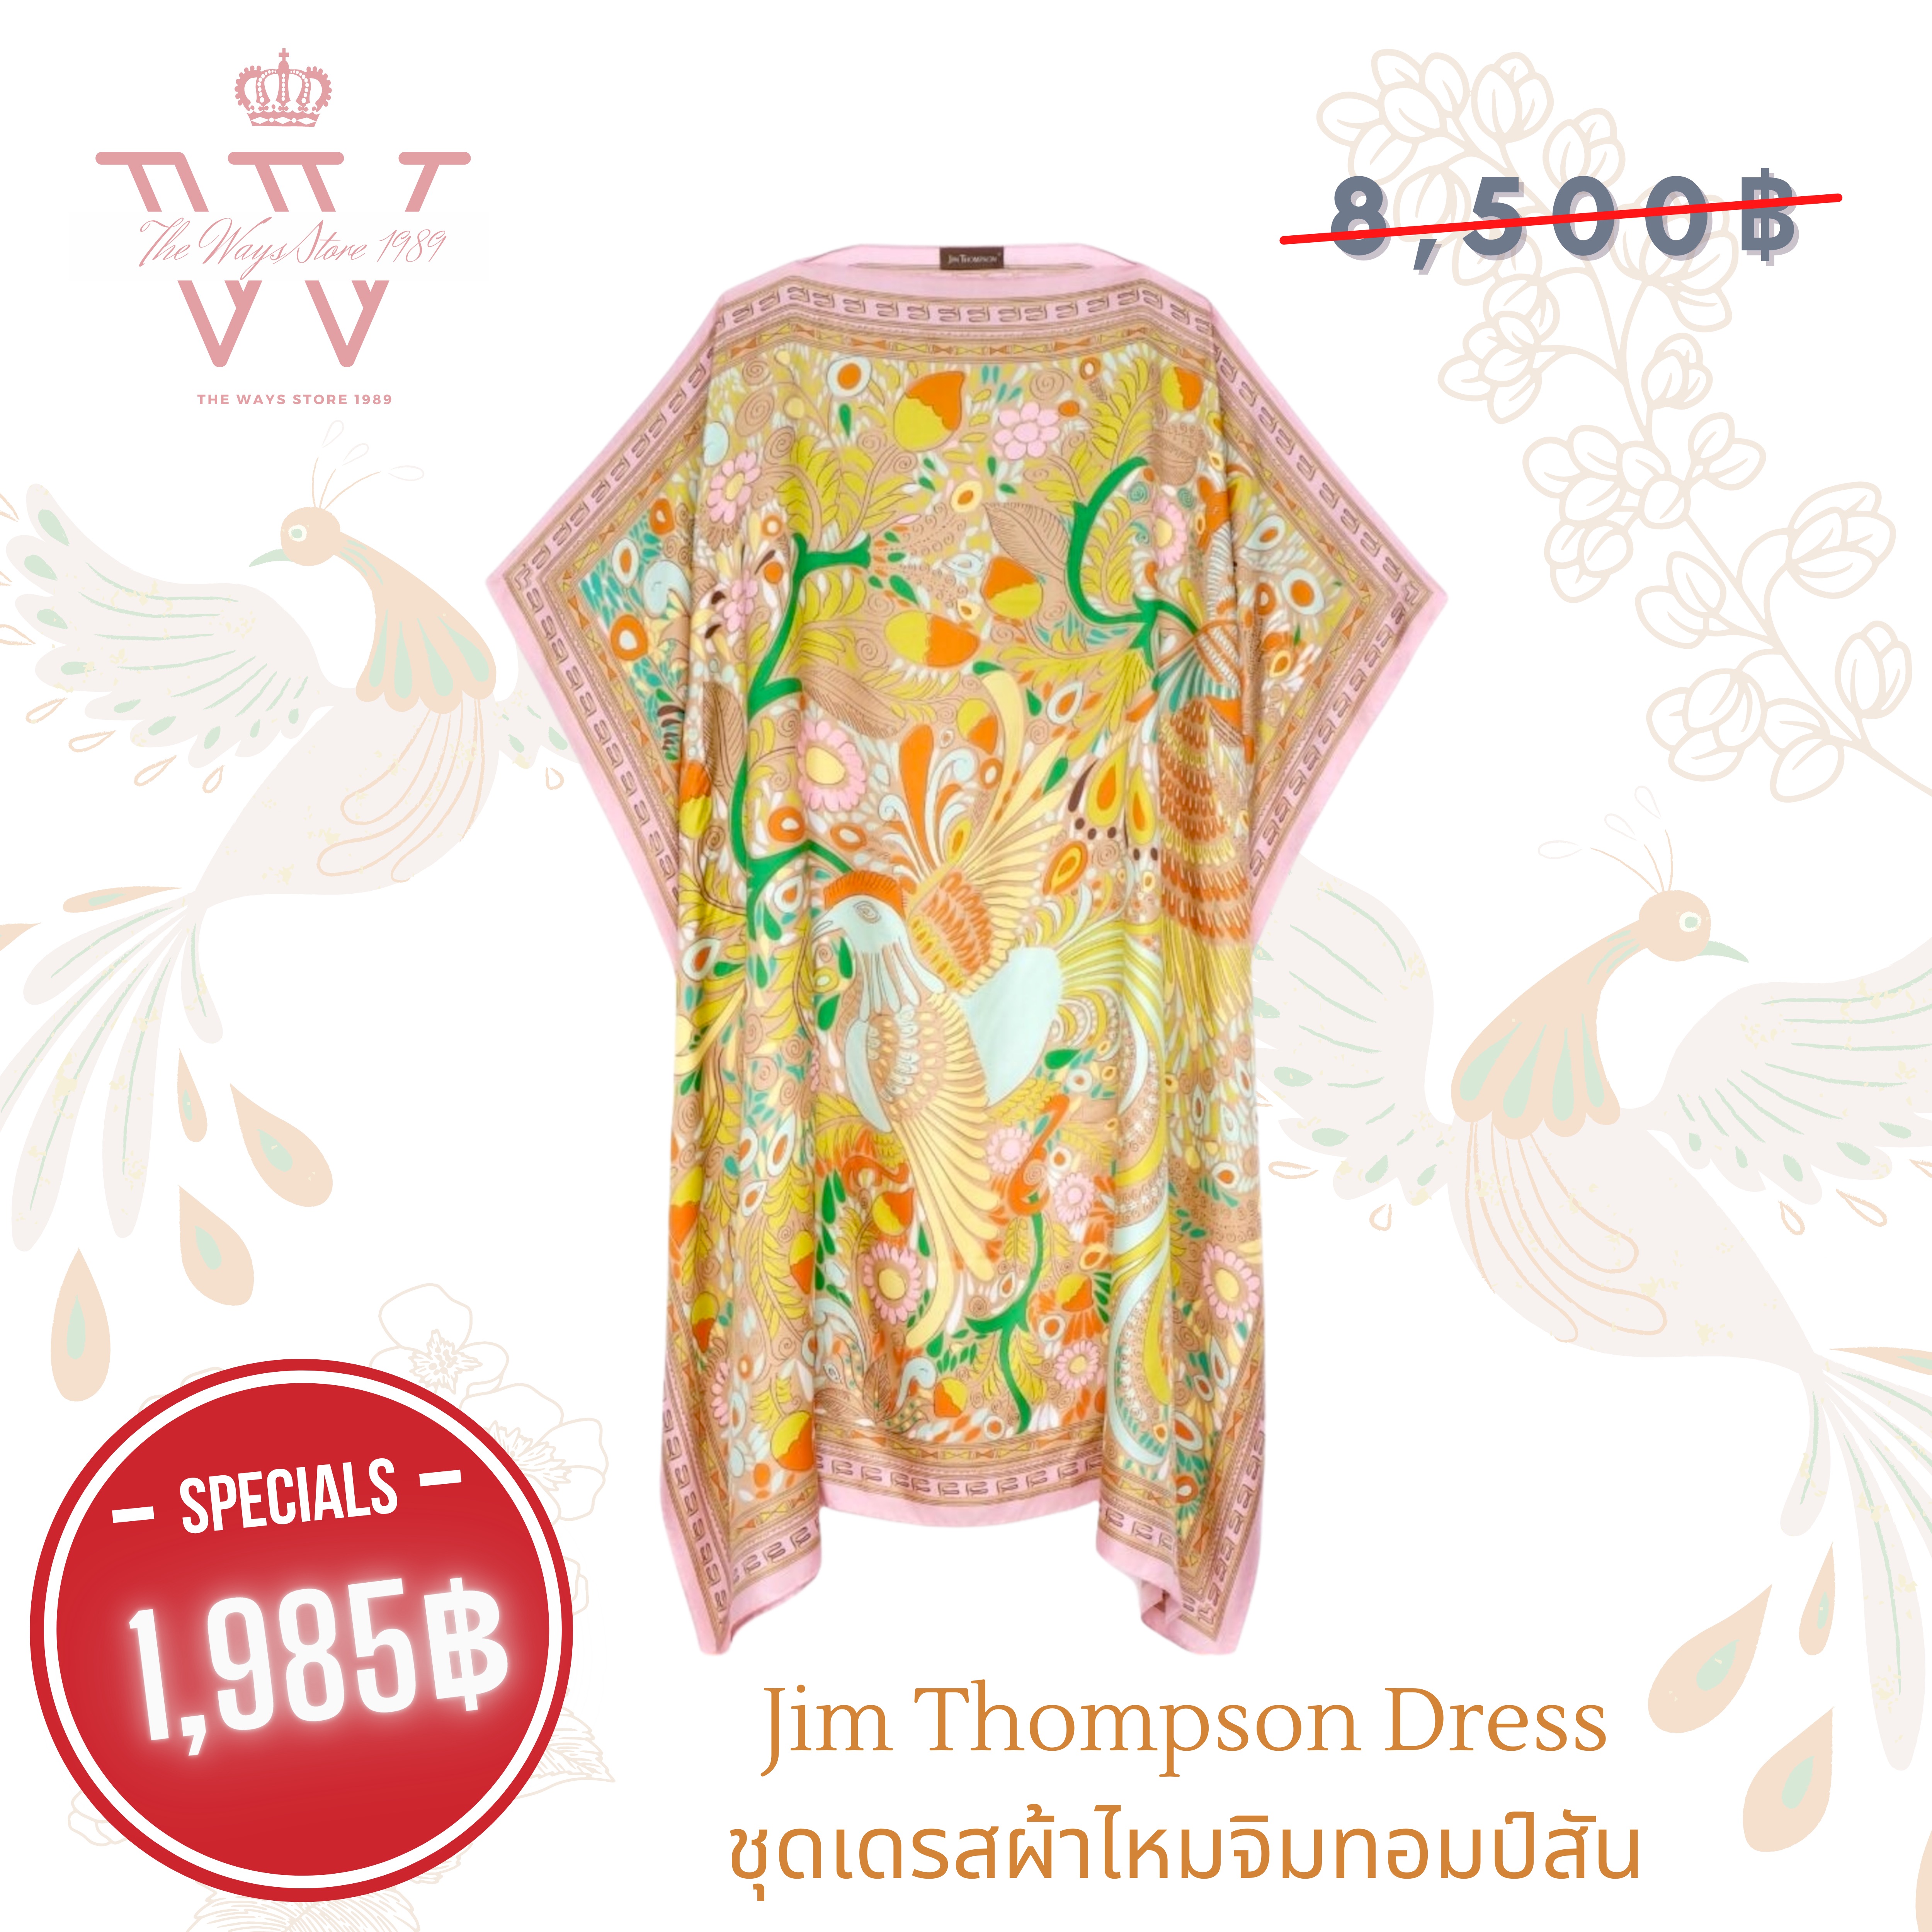 Jim Thompson Dress ราคาถูก ซื้อออนไลน์ที่ - พ.ค. 2022 | Lazada.co.th